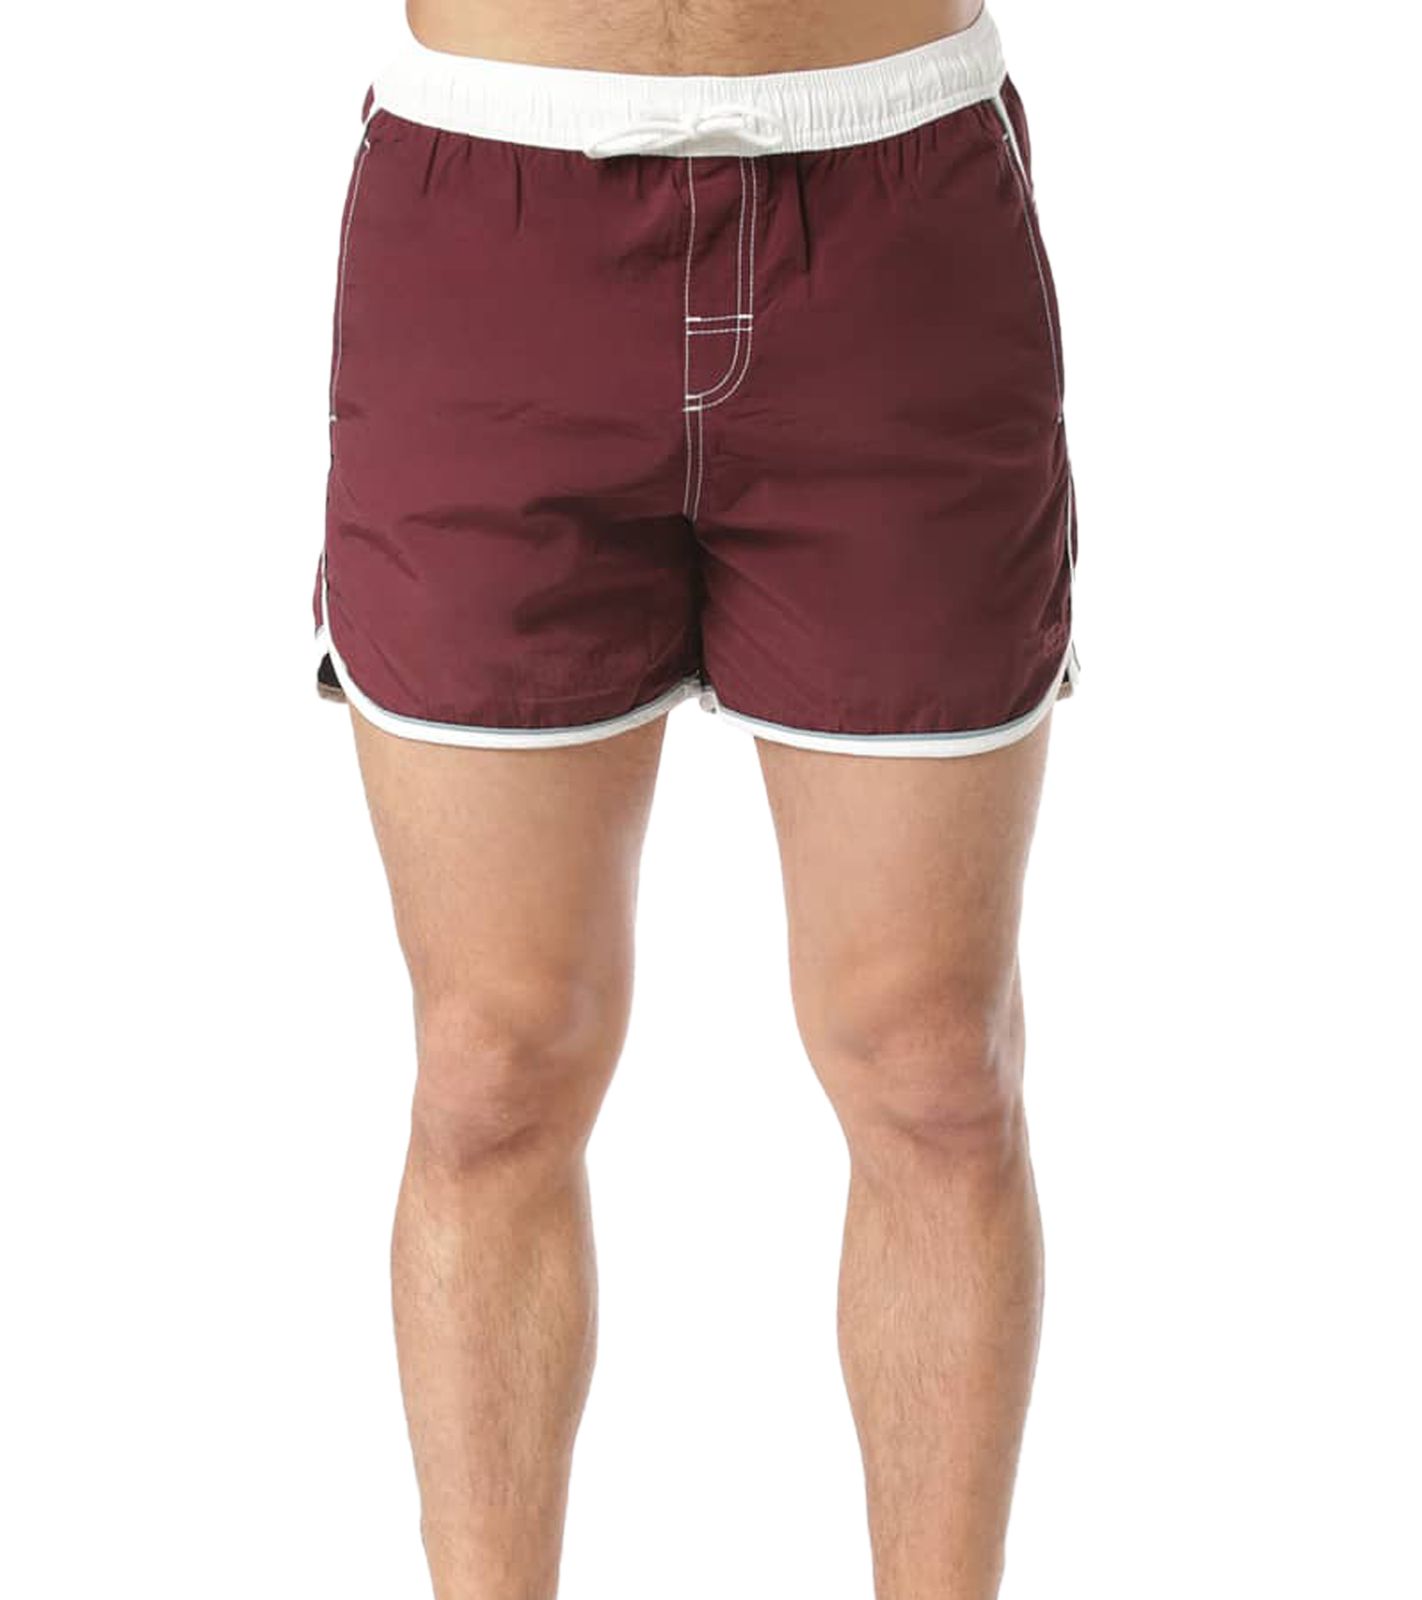 Planet Sports Joplin Herren Board-Shorts aus schnell trocknendem Material Kurze-Hose PS100009-557 Bordeaux-Rot von Planet Sports